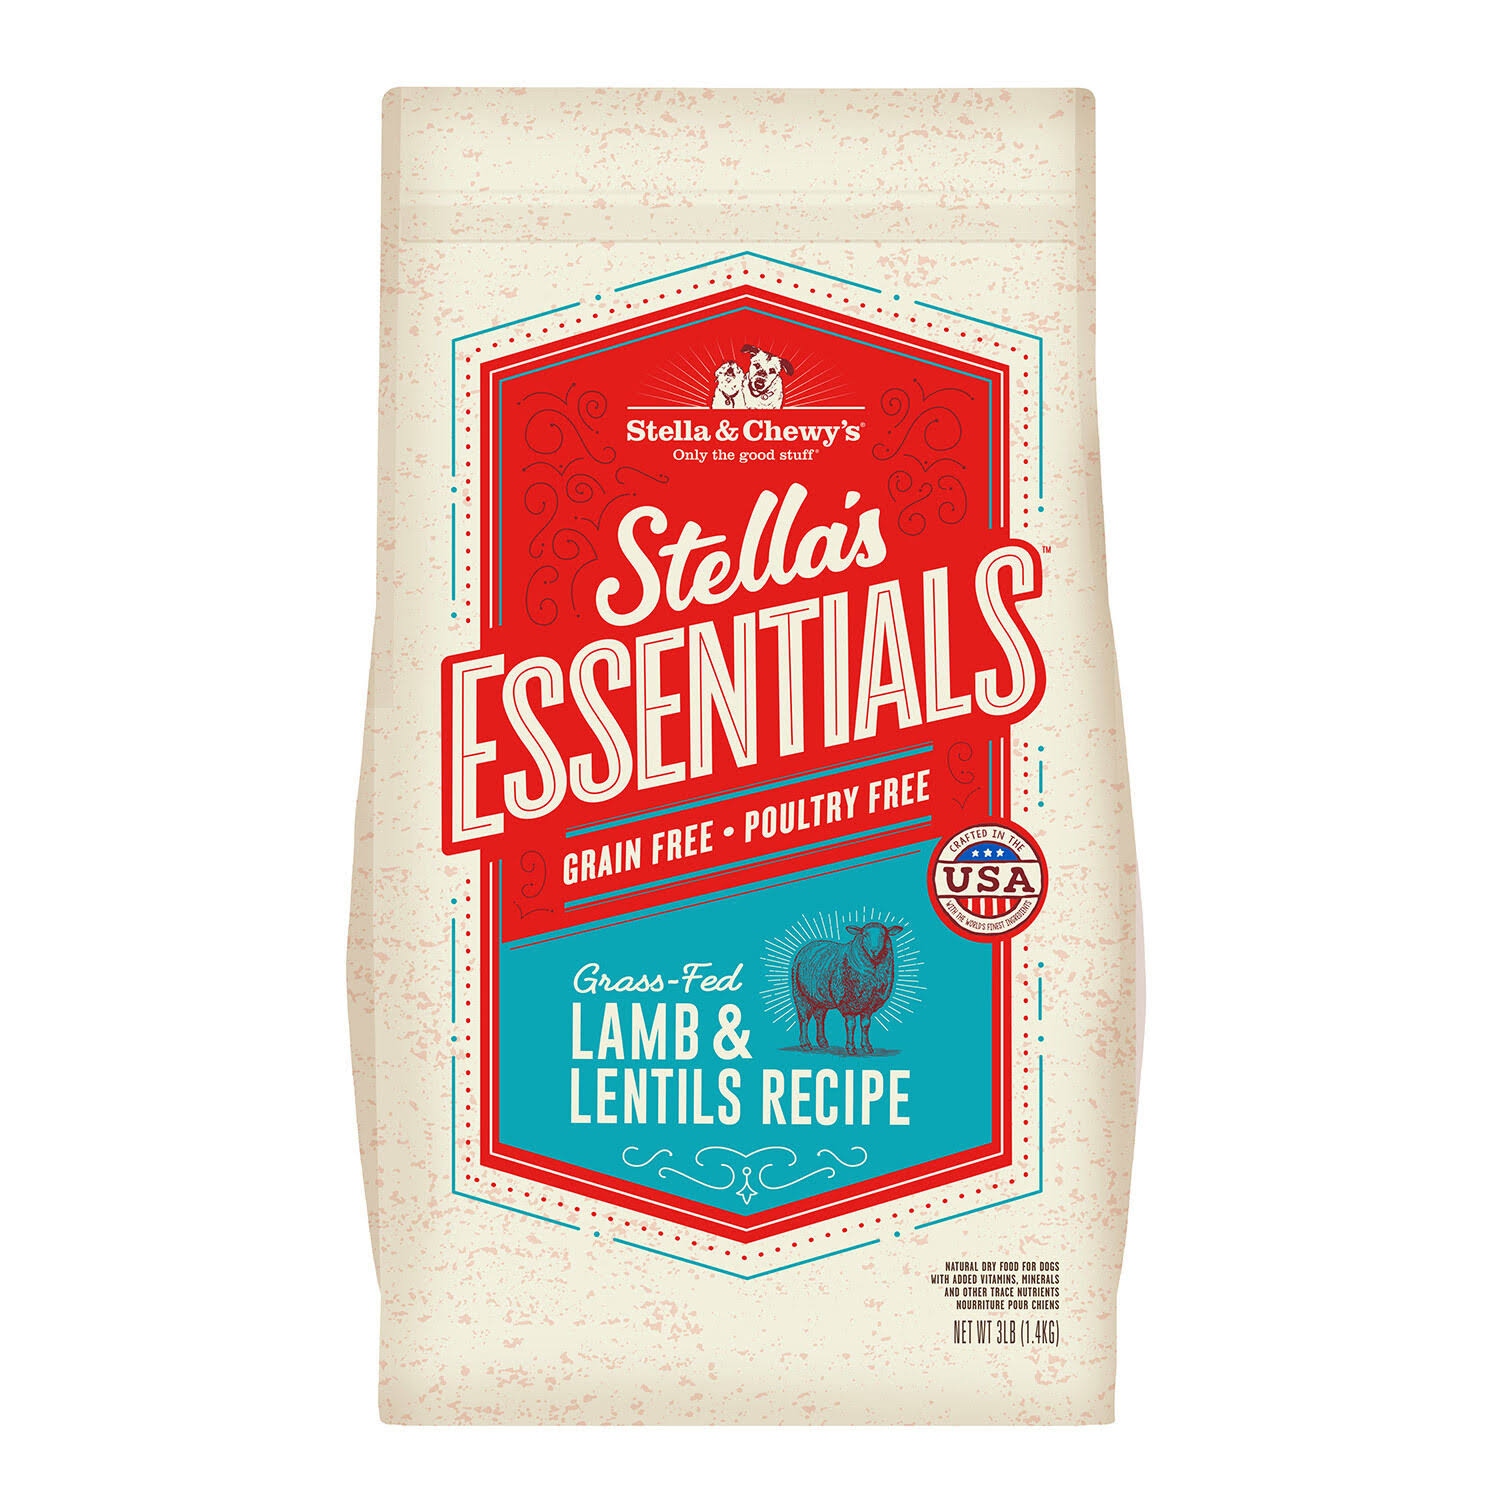 Stella & Chewy's Essentials Grain-Free Grass-Fed Lamb & Lentils Recipe Dog Food - 3-Lbs.